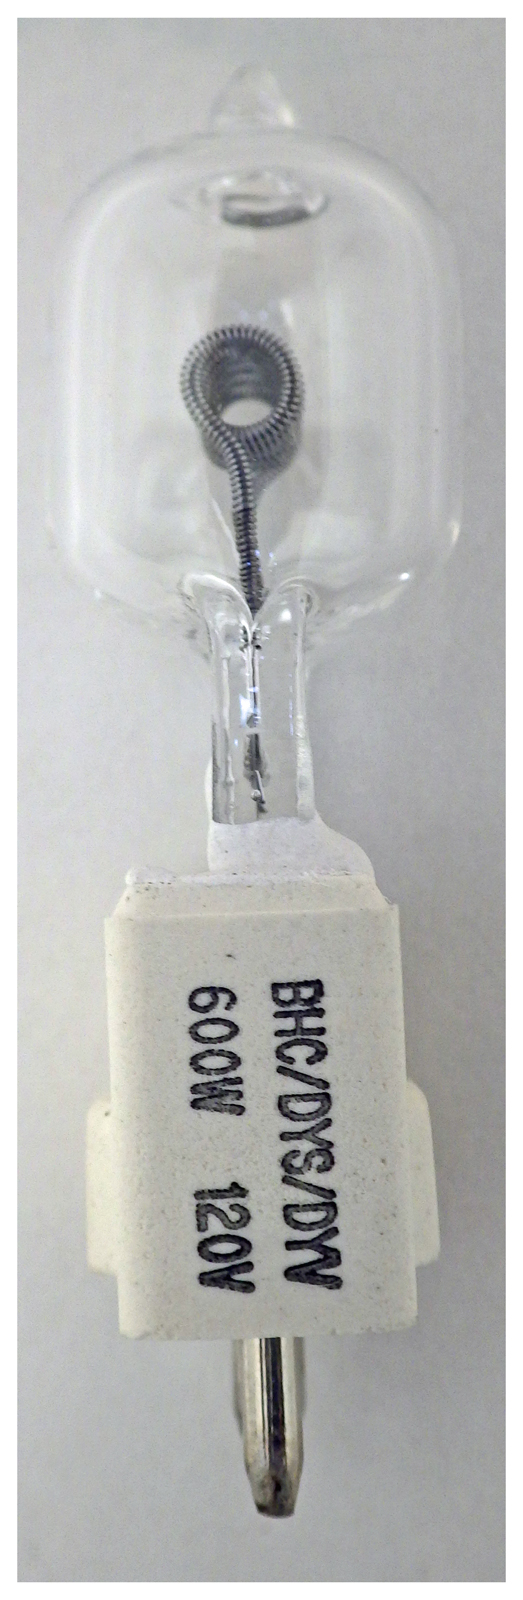 OSRAM DYS/BHC/DYV 600w 120v GZ9.5 3200k Single Ended Halogen Light Bulb - image 3 of 4